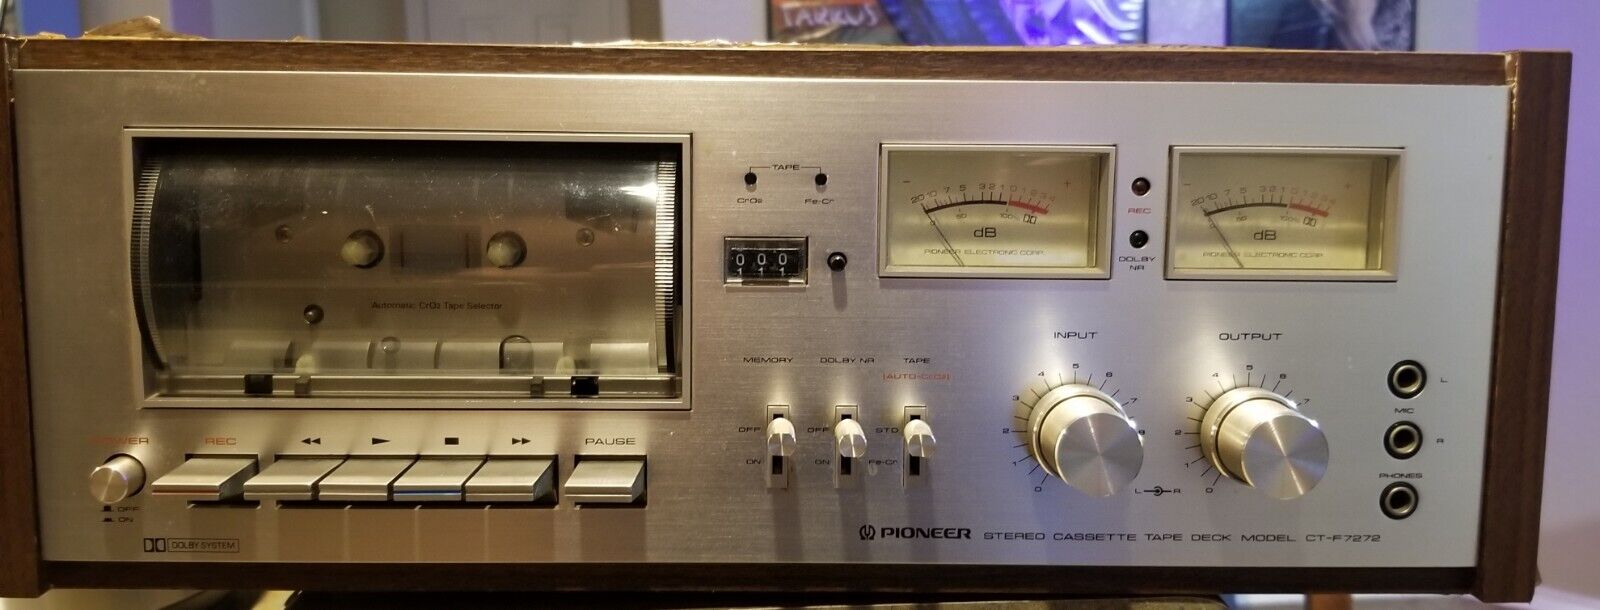 Pioneer Cassette Tape Deck CT-F7272 1970s Vintage Silver